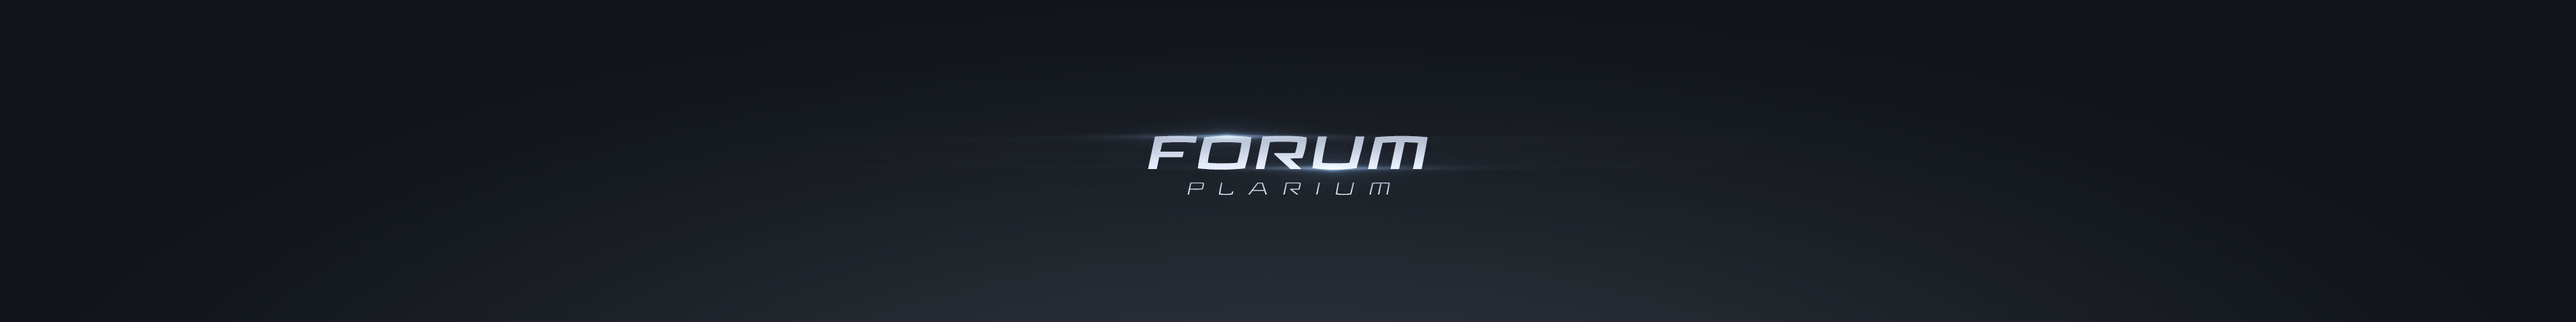 Plarium Forums